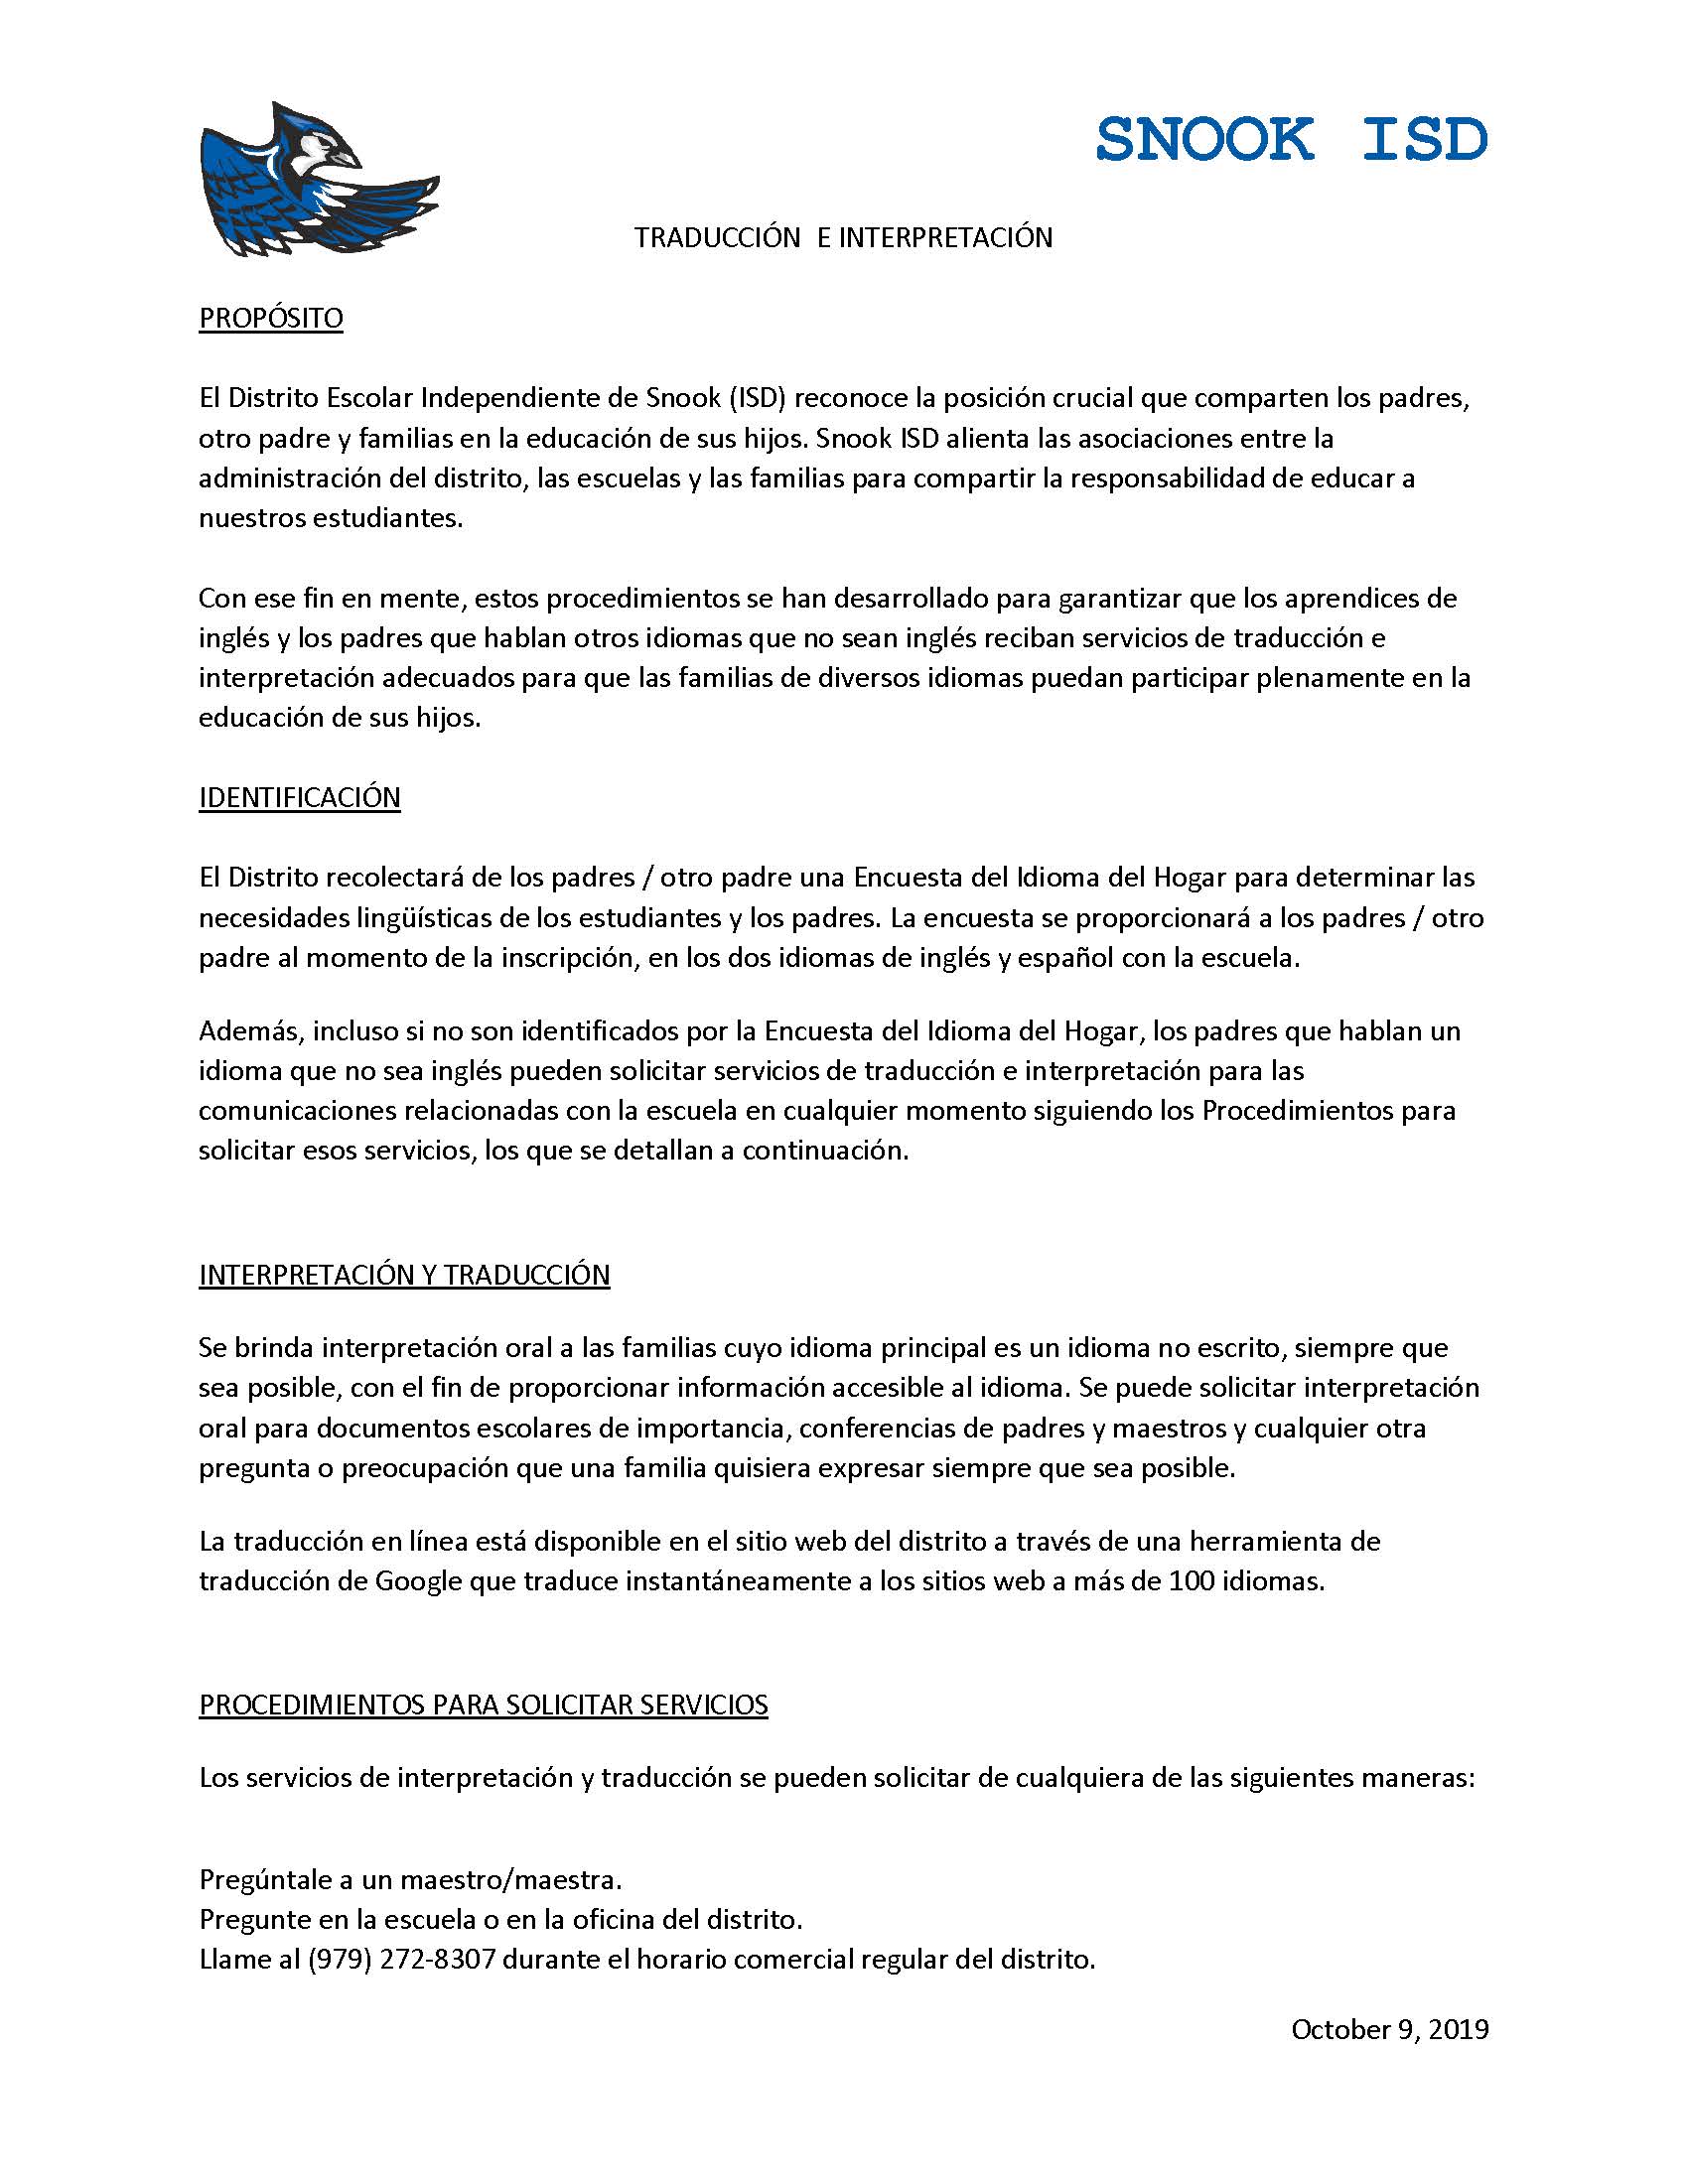 Snook ISD Translation & Interpretation in Spanish